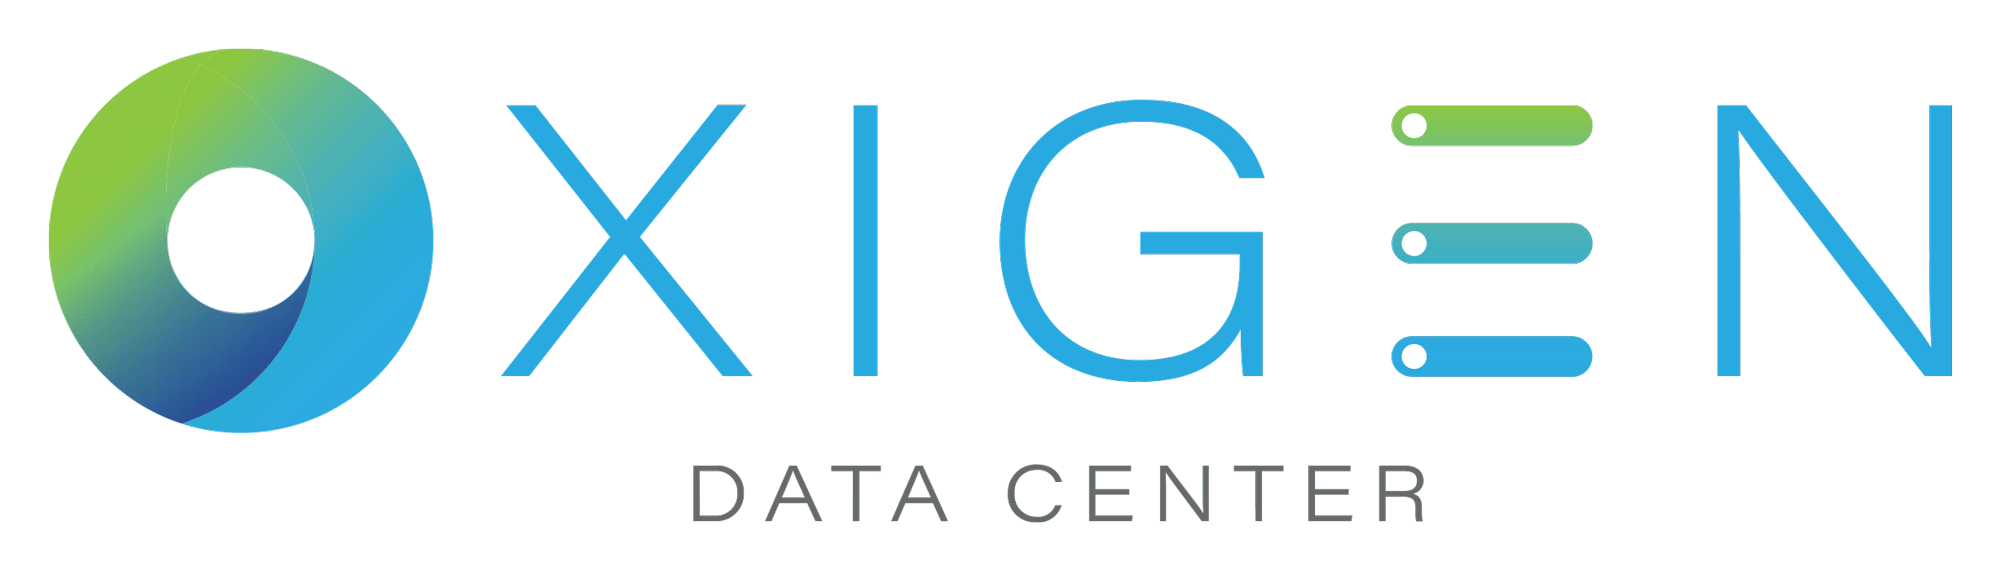 Oxigen Data Center logo